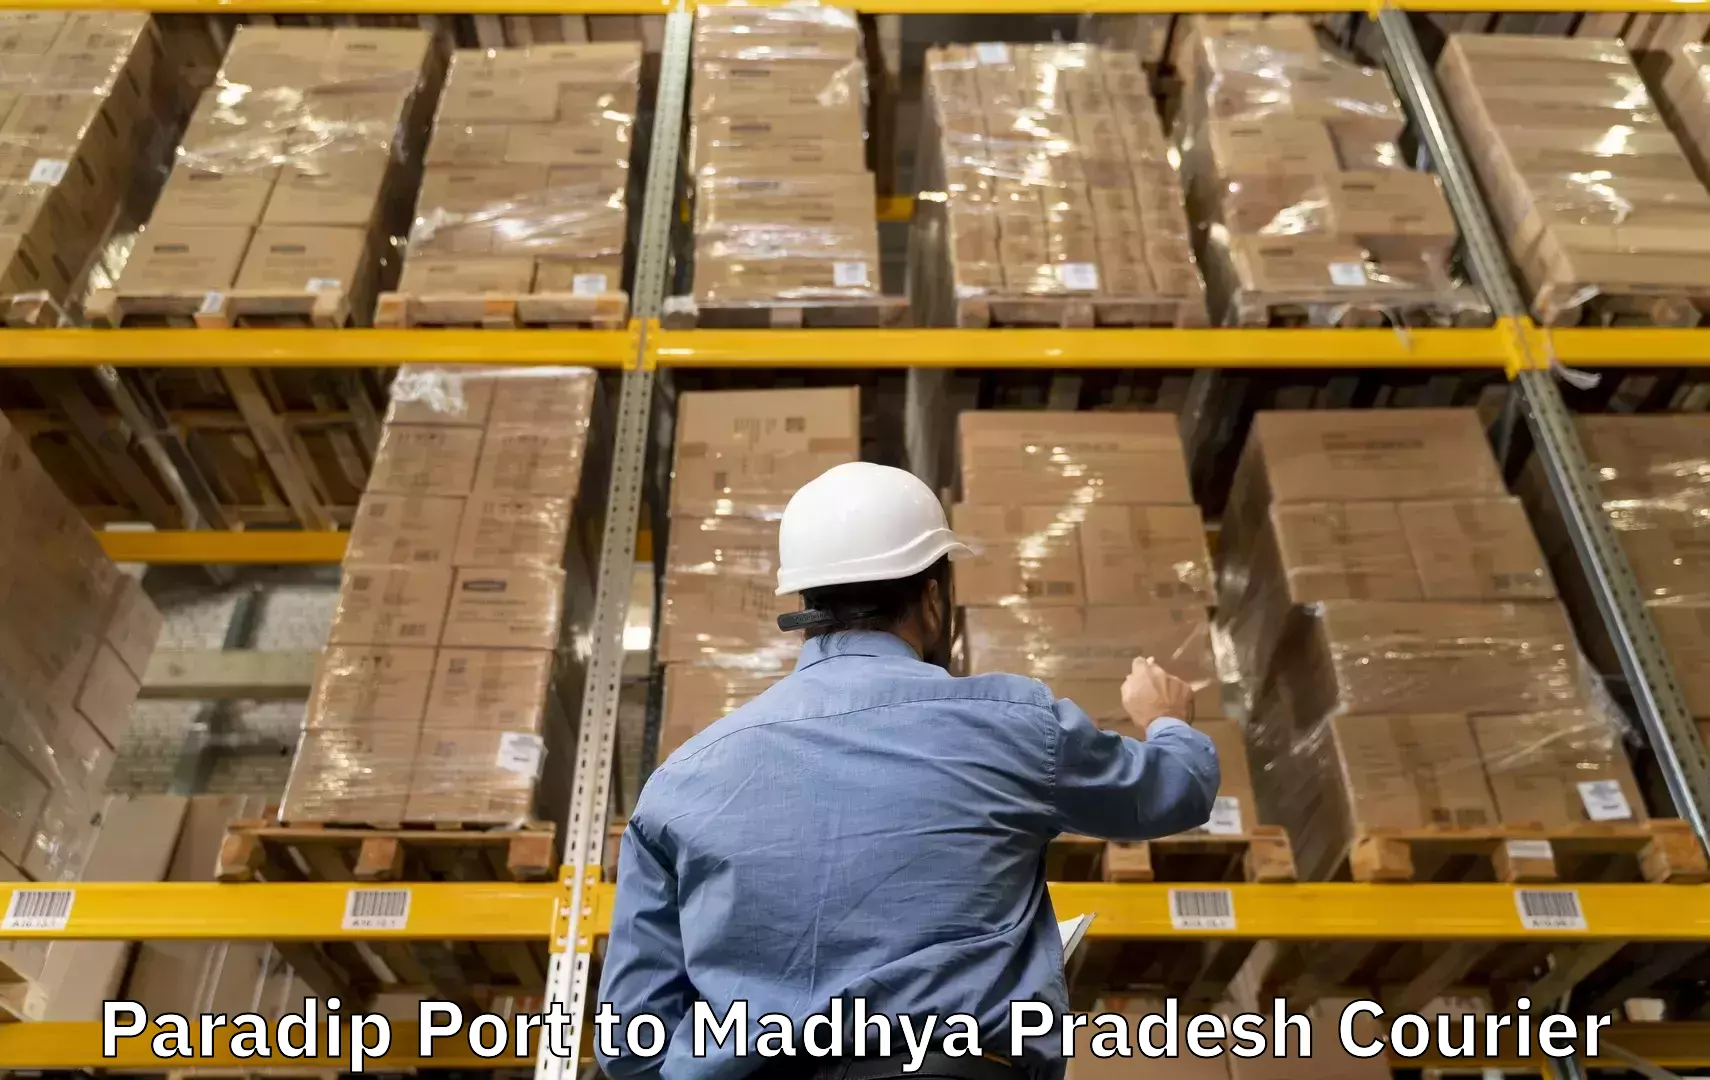 Luggage delivery providers Paradip Port to Ashoknagar